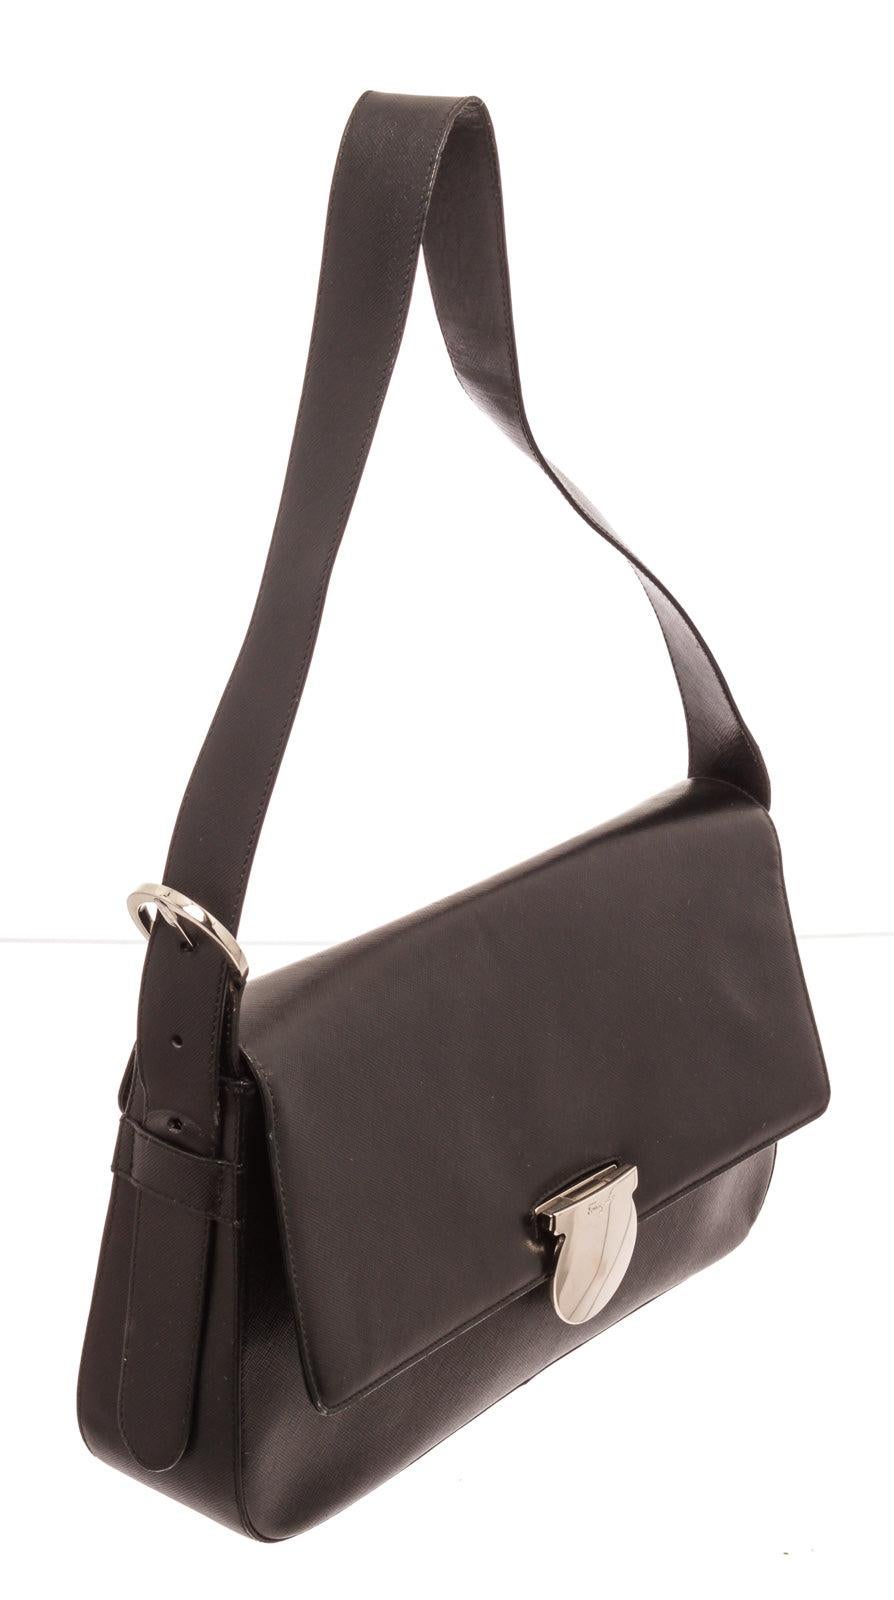 Ferragamo Black Leather Shoulder Bag with silver-tone hardware, single shoulder straps, turn-lock closure at front closure.
33289MSC